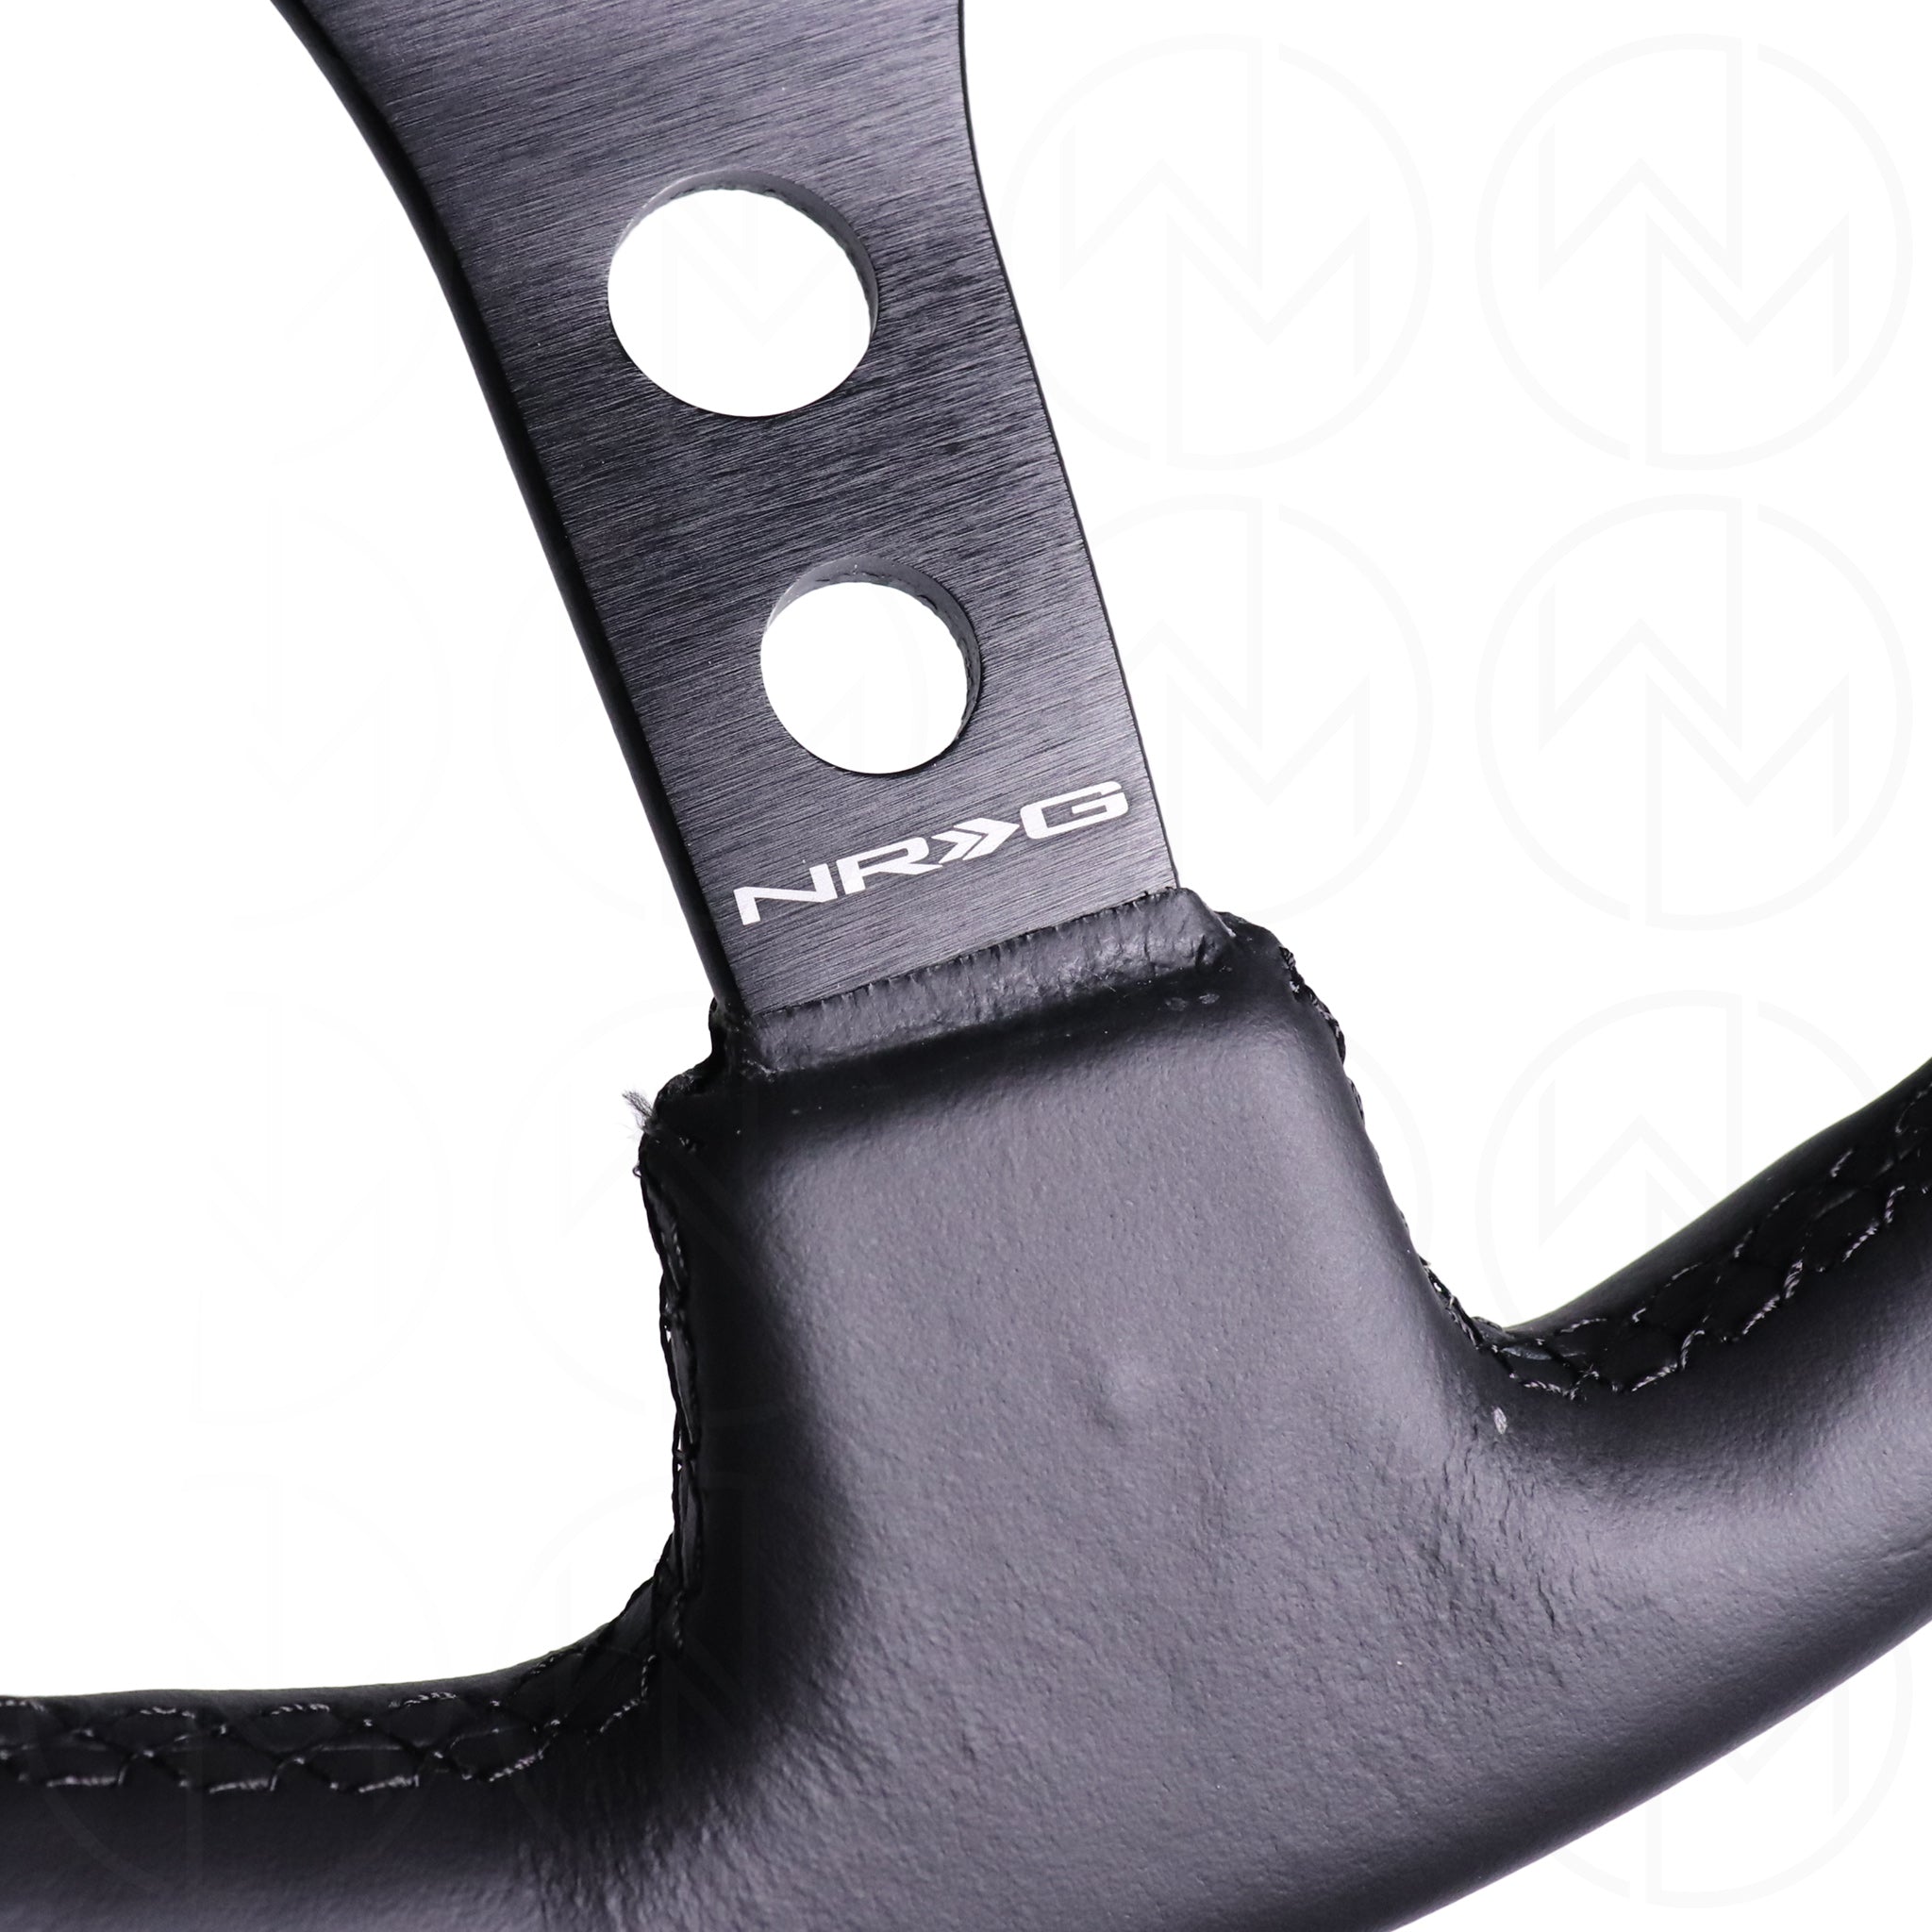 NRG Sports Steering Wheel - 350mm Leather w/Spoke Holes & Black Stitch